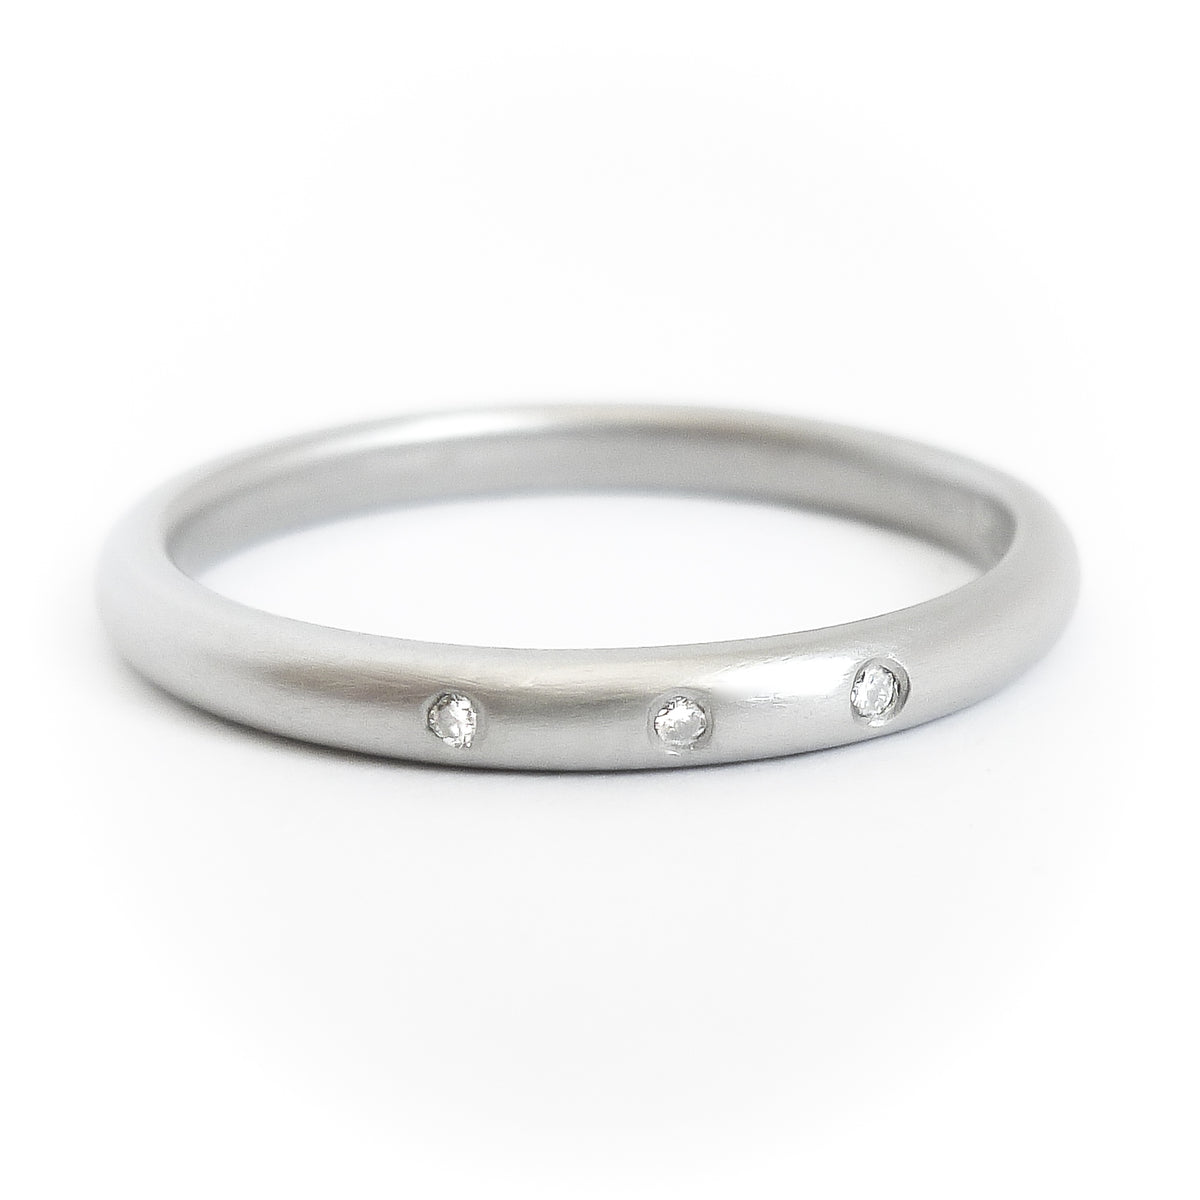 Simple elegant contemporary modern platinum and diamond wedding ring handmade by Sue LaneSimple elegant contemporary modern platinum and diamond wedding ring handmade by Sue Lane